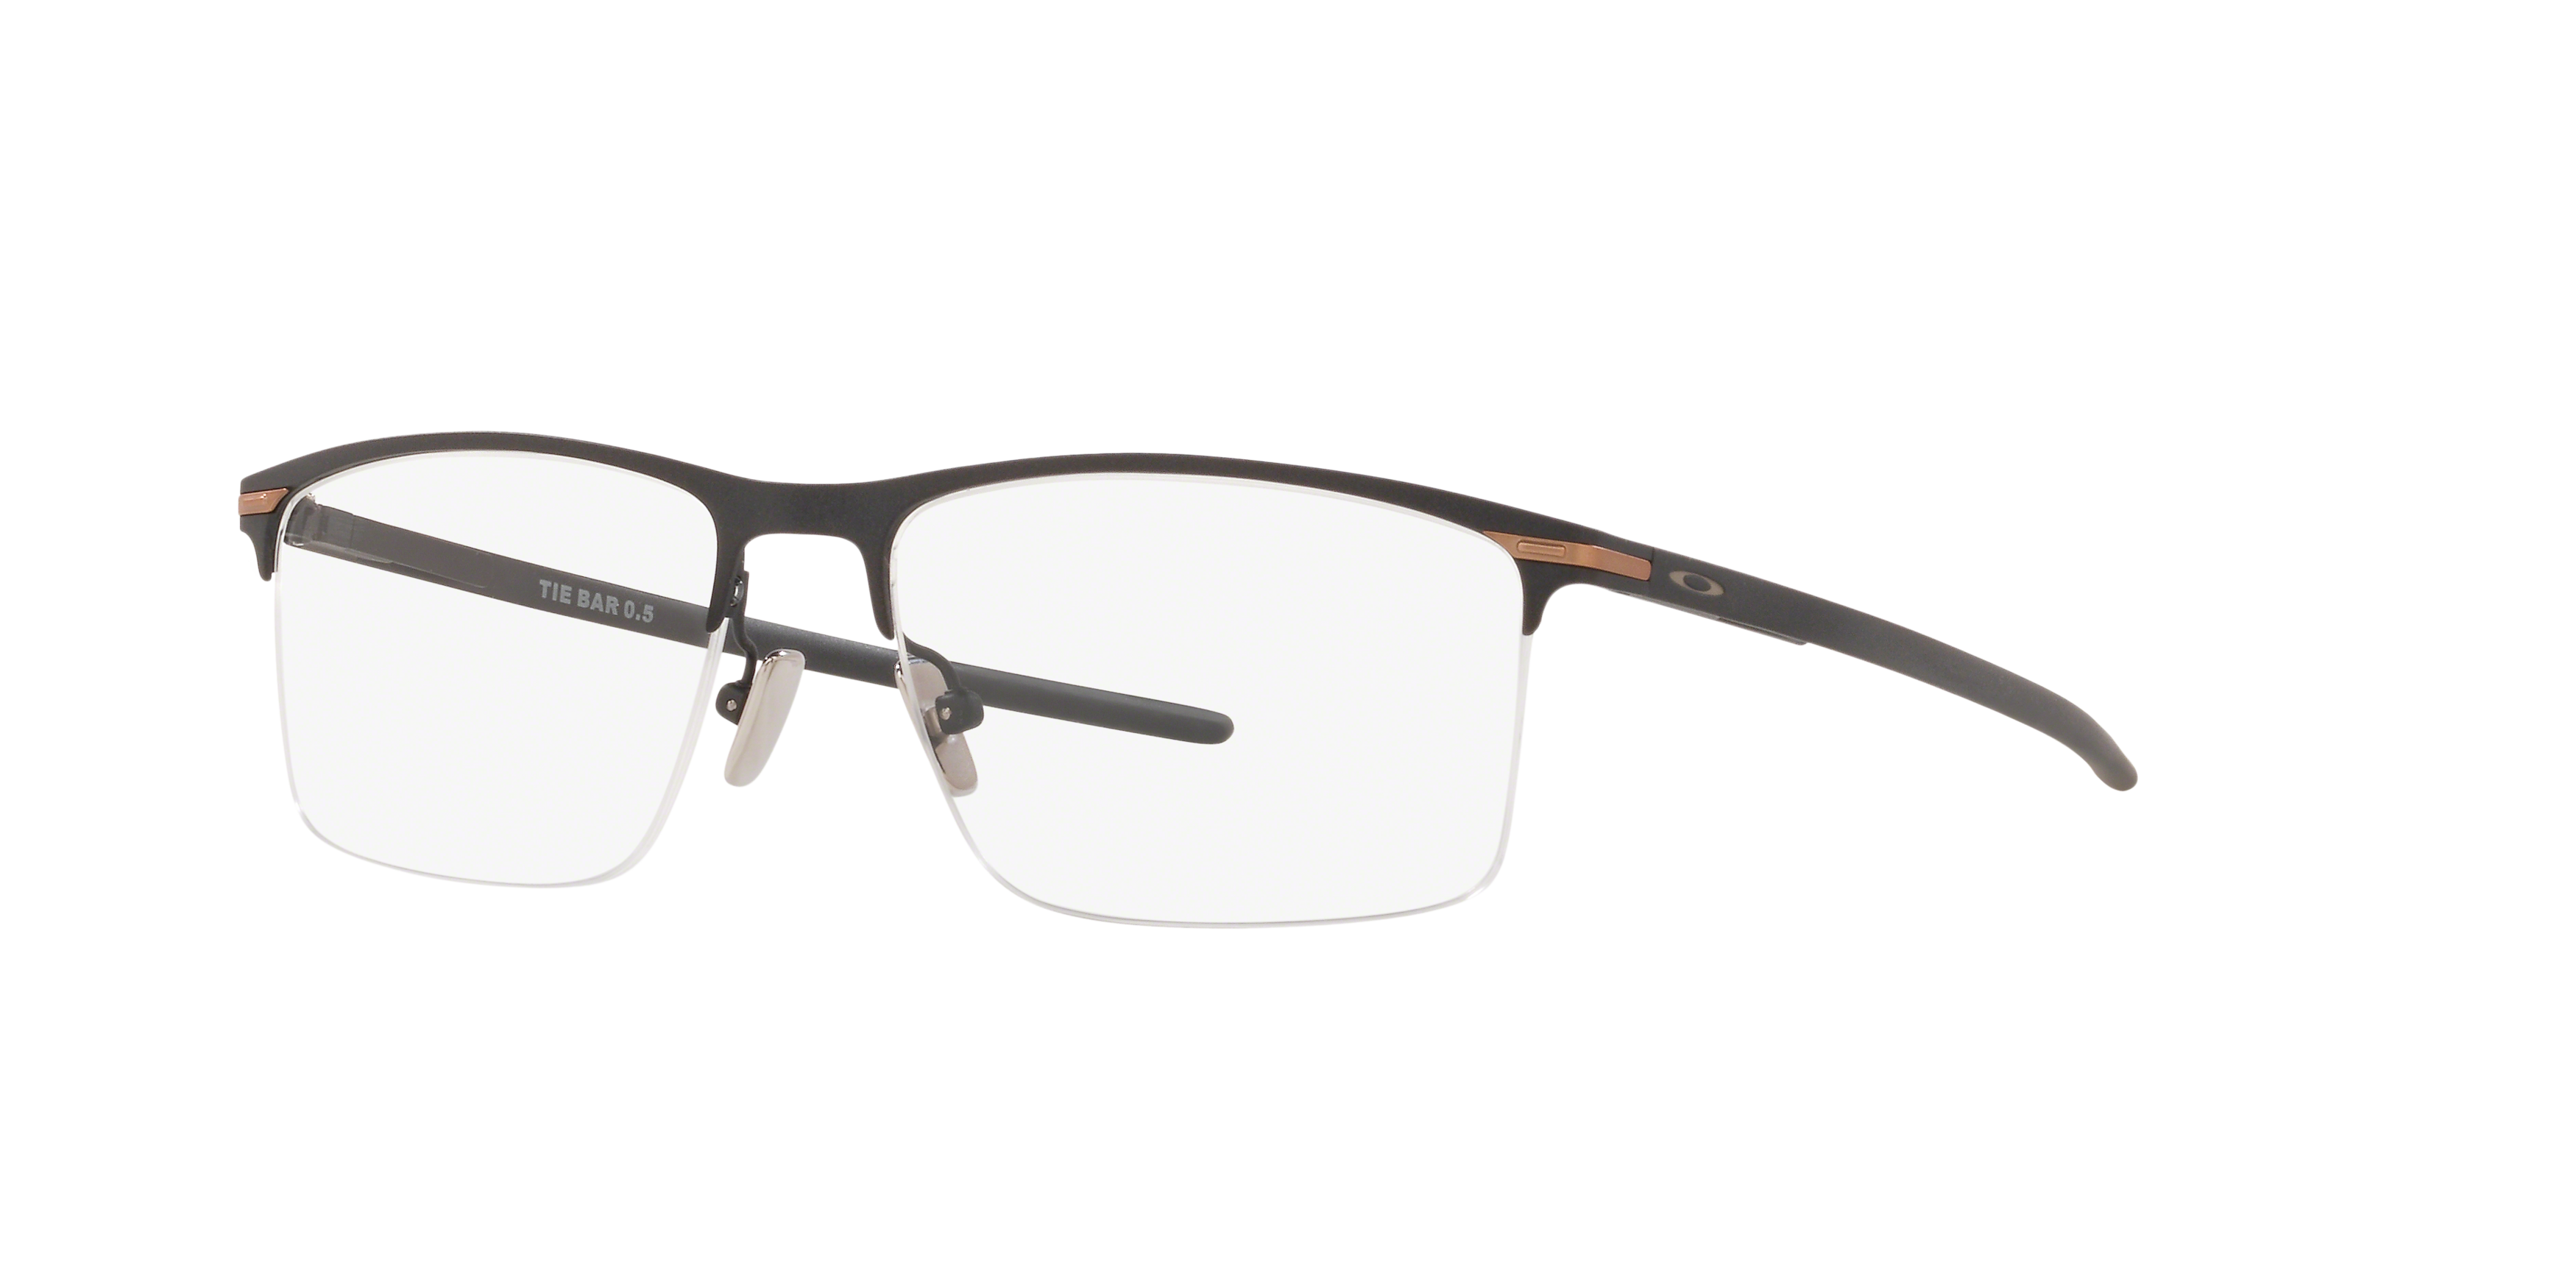 Angle_Left01 Oakley OX 5140 Glasses Transparent / Grey